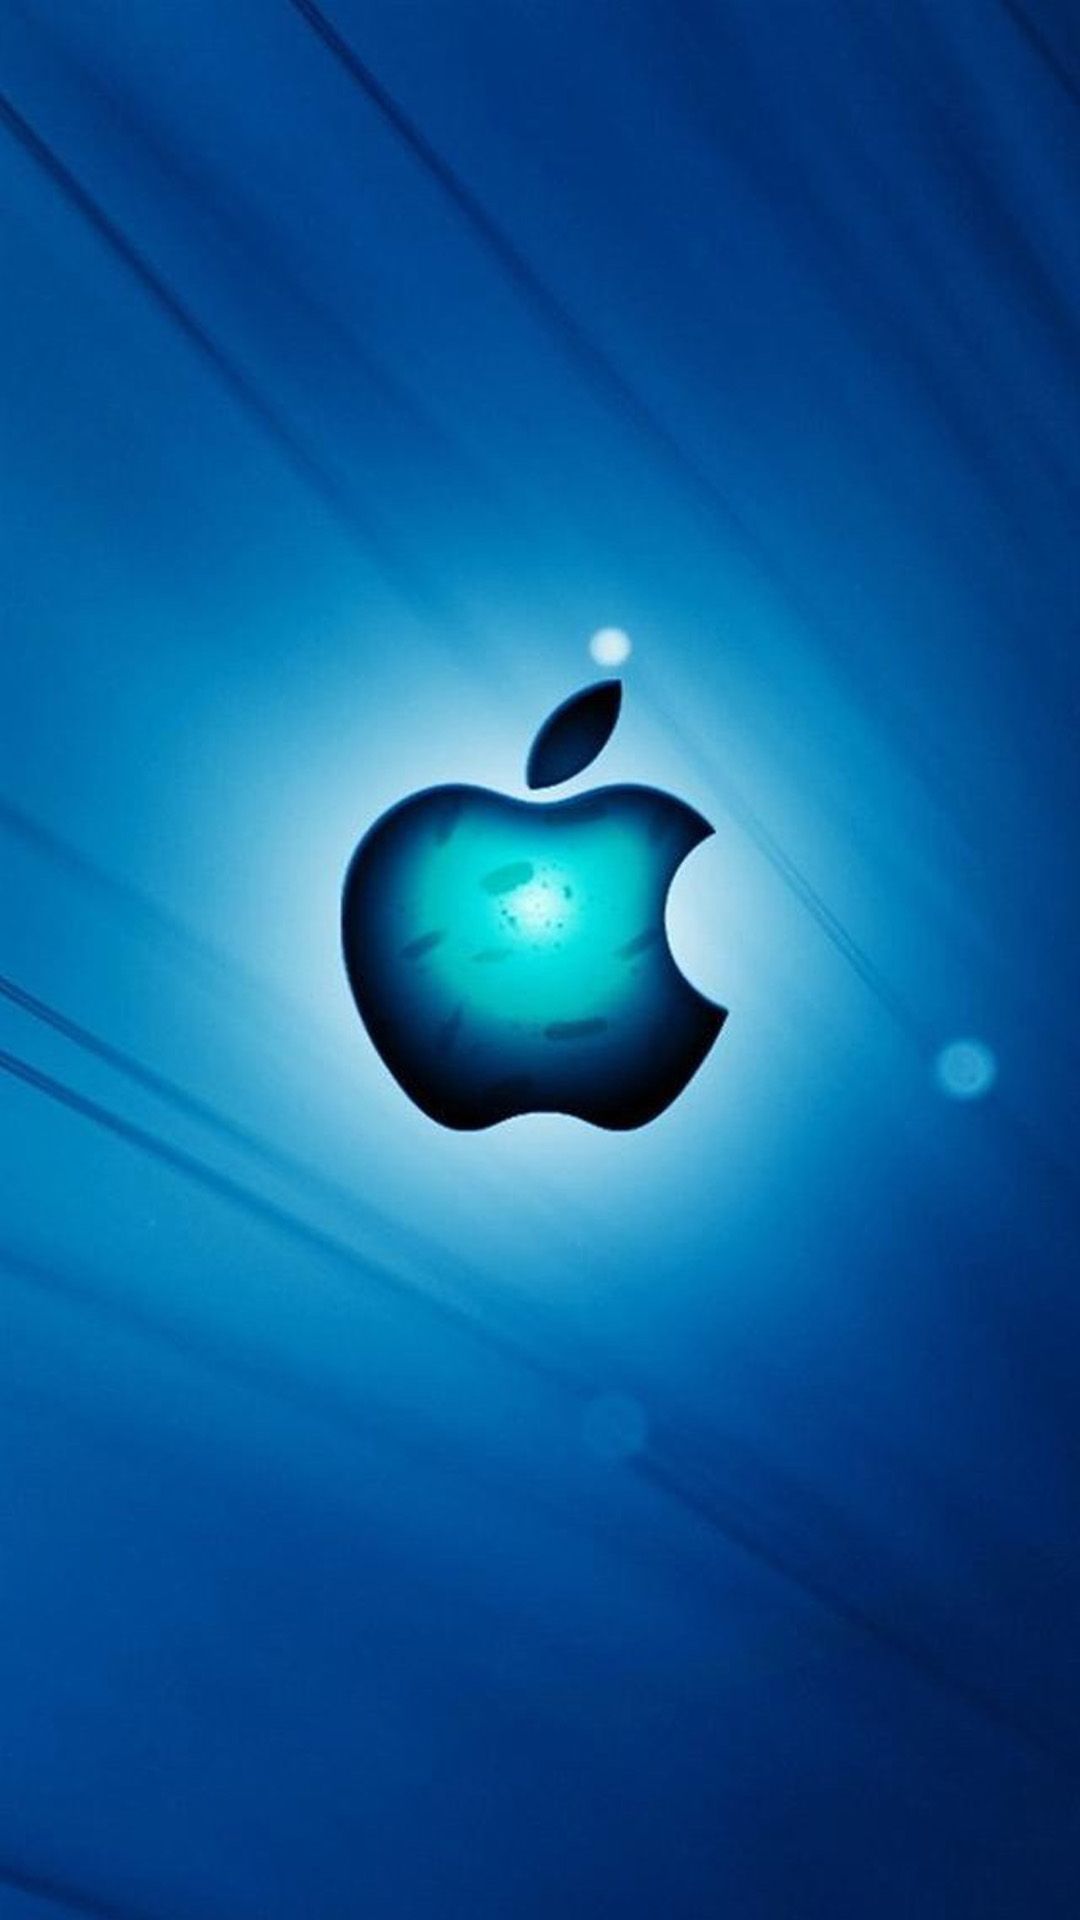 Free download Apple Logo iPhone Wallpapers Top Apple Logo iPhone ...